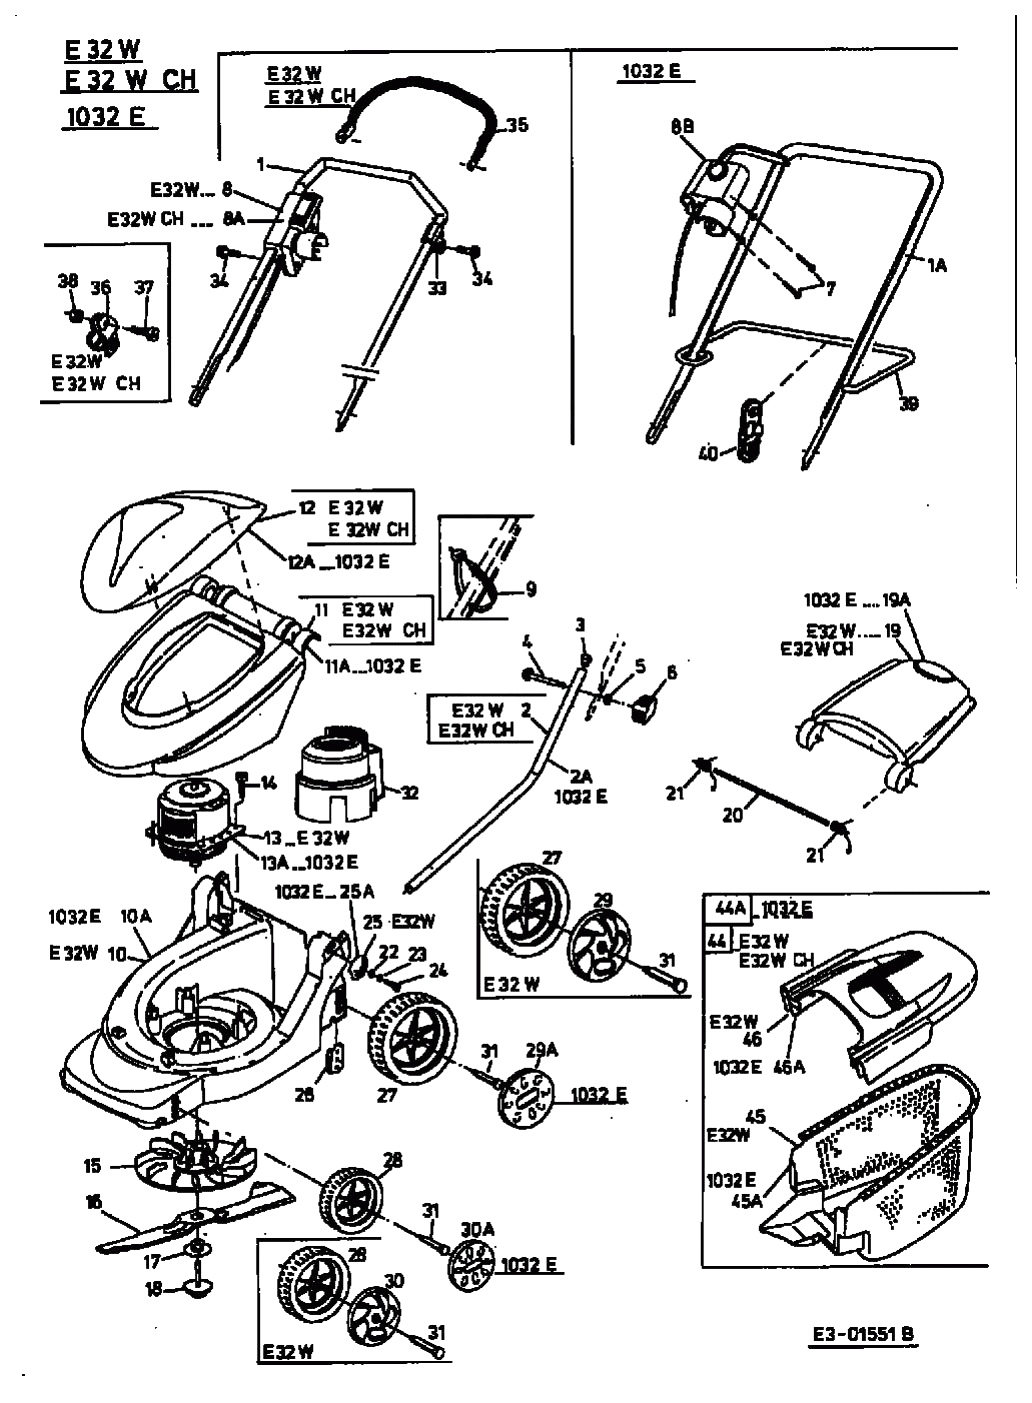 MTD Артикул 18D-C2D-664 (год выпуска 2002). Основная деталировка